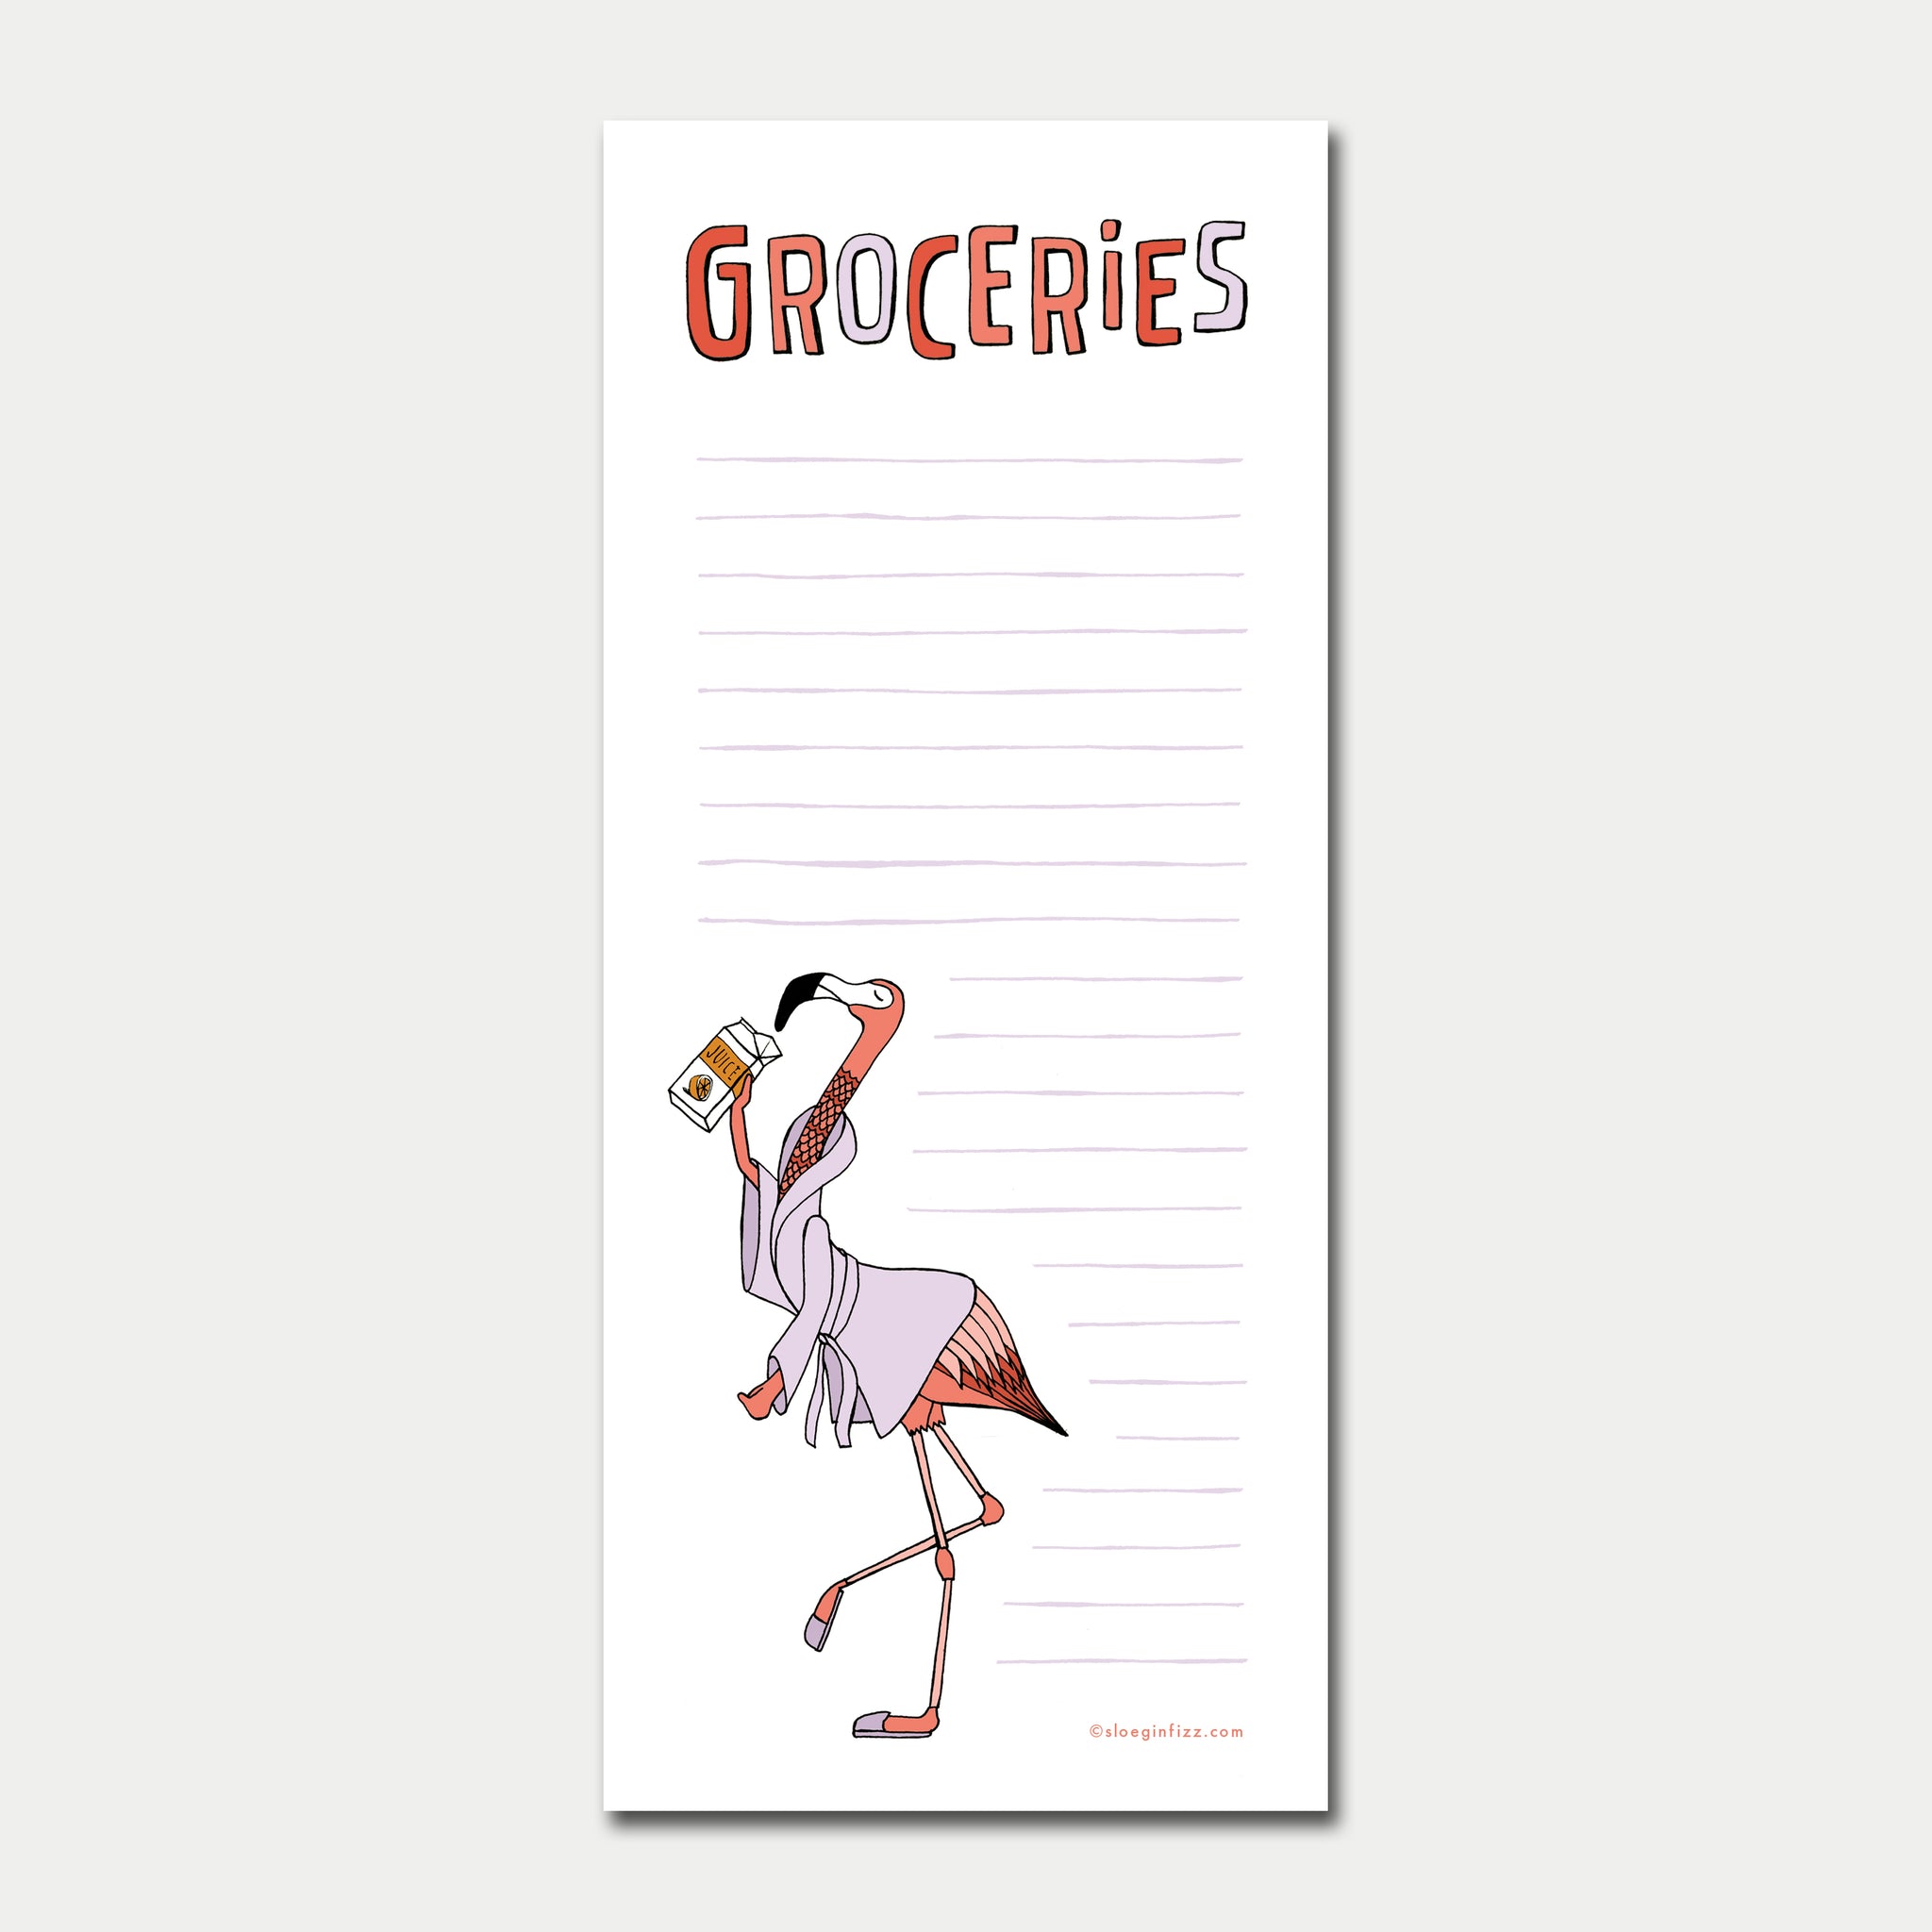 Flamingo Grocery List Notepad